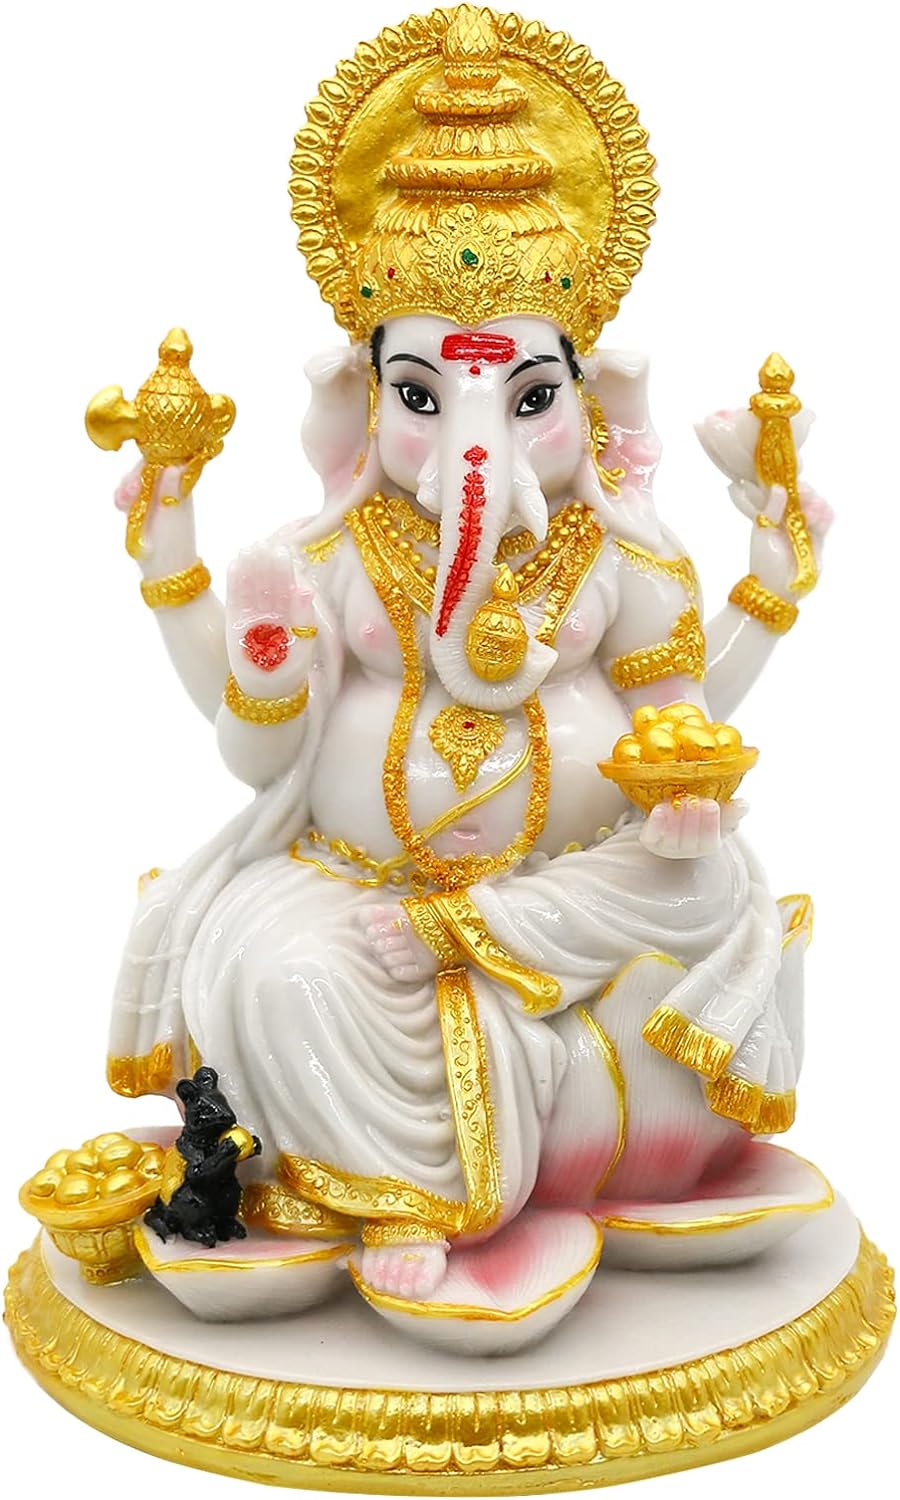 alikiki Hindu God Ganesh Chaturthi Figurine - 8.4”H Indian Idol Ganesha Statue Ganpati Elephant Hindu God Pooja Item Diwali Home Office Meditation Room Temple Mandir Altar Shrine Puja Decor